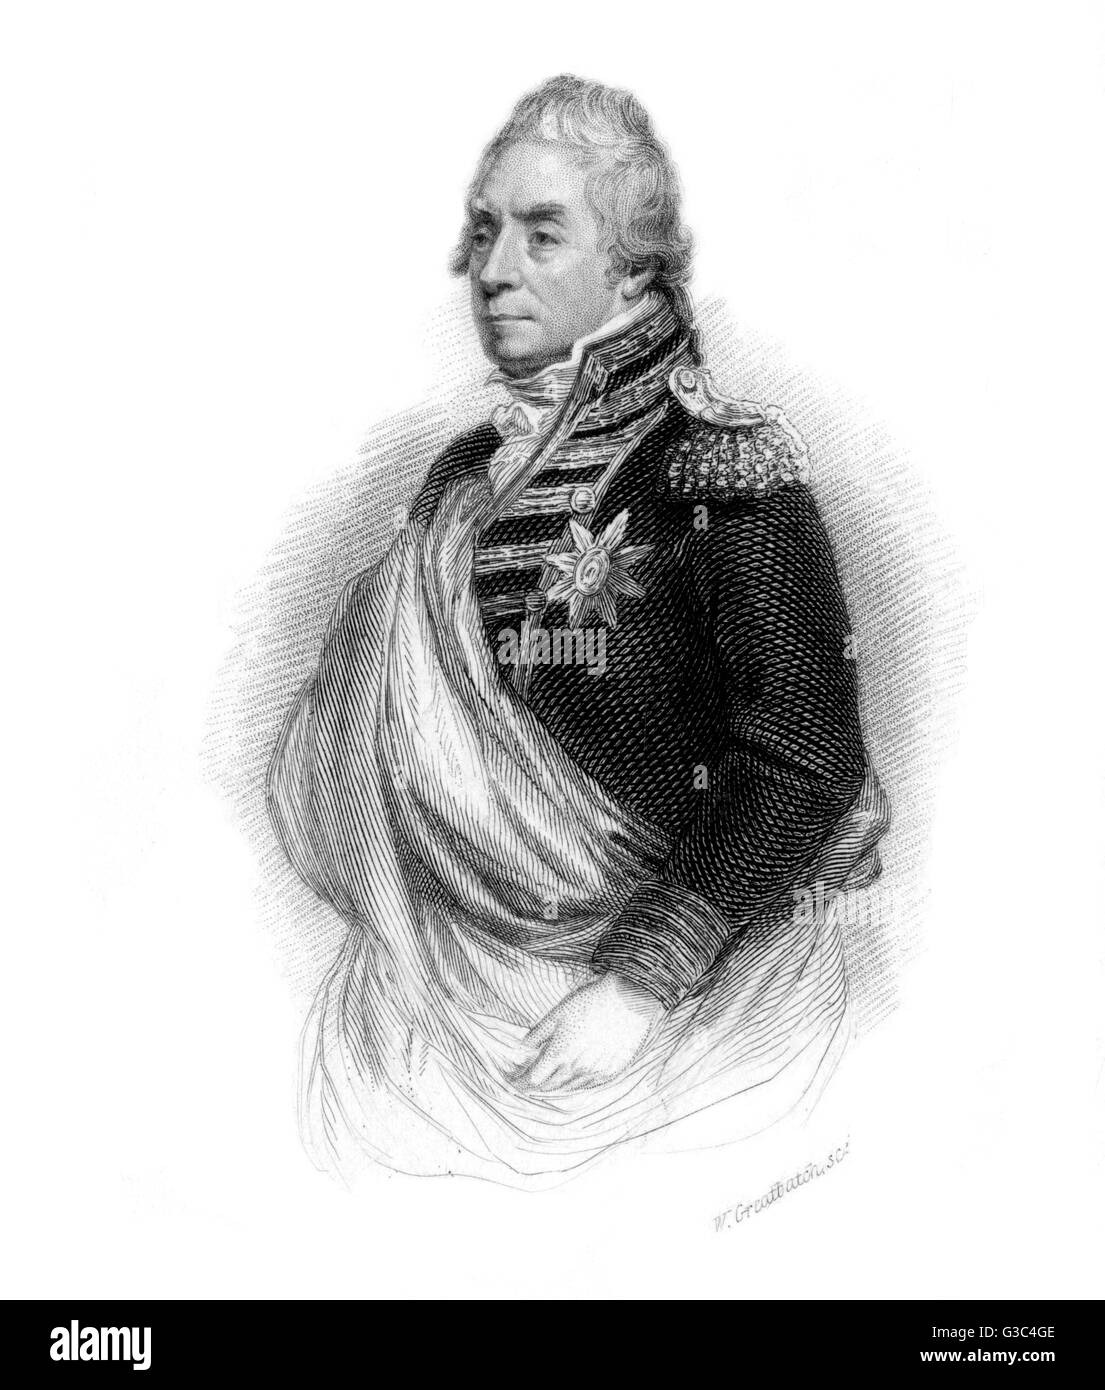 George Keith Elphinstone - amiral naval britannique Banque D'Images